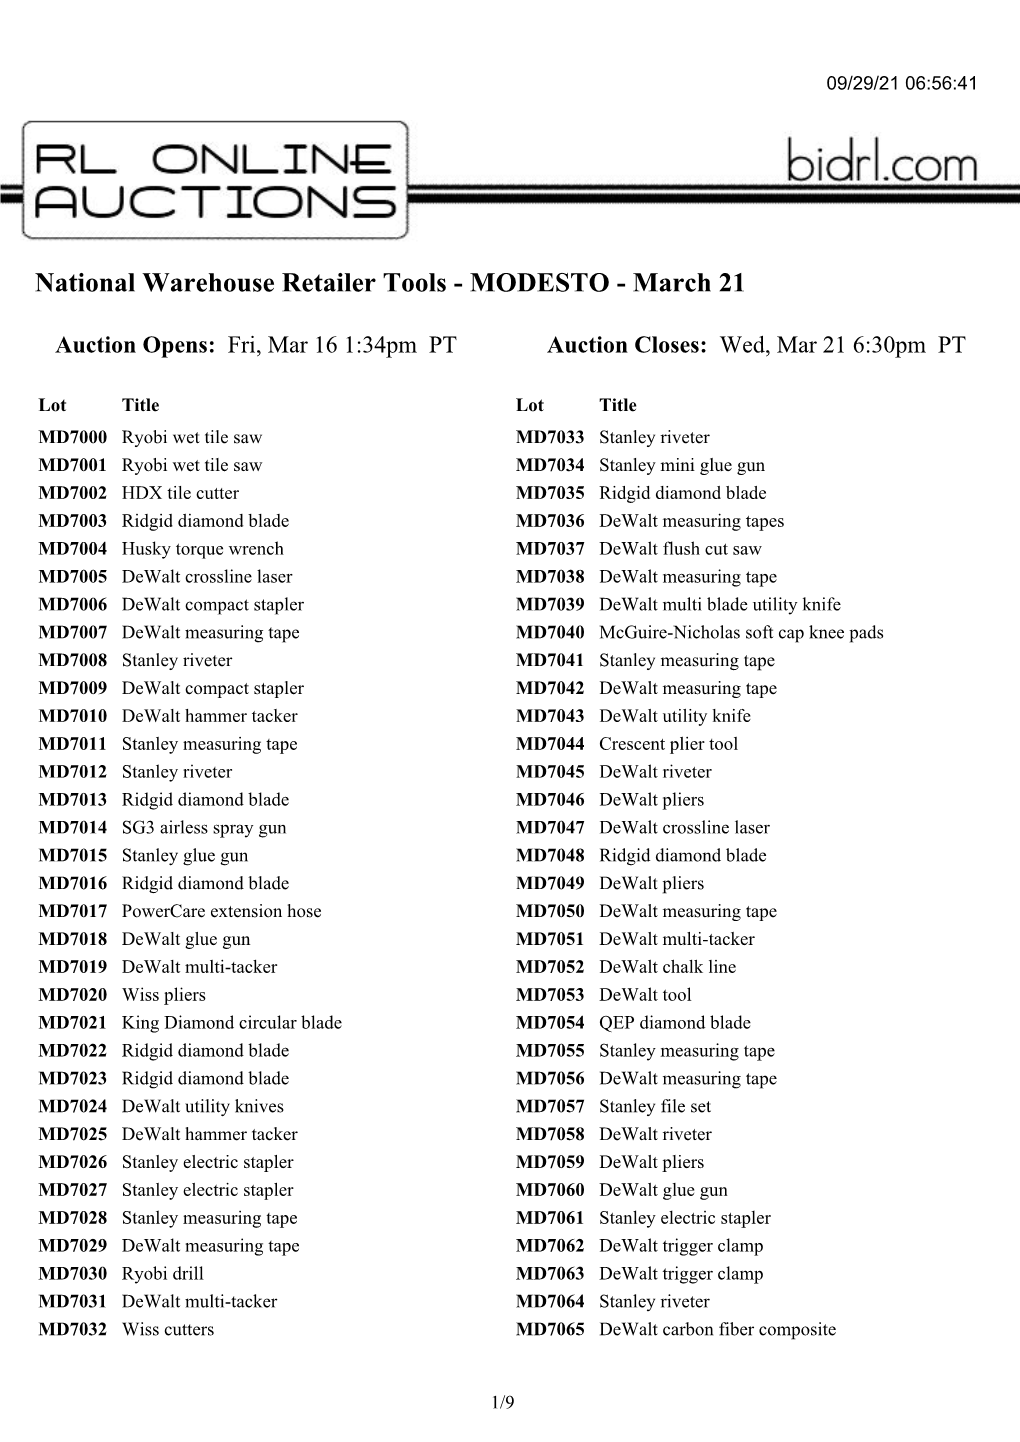 National Warehouse Retailer Tools - MODESTO - March 21